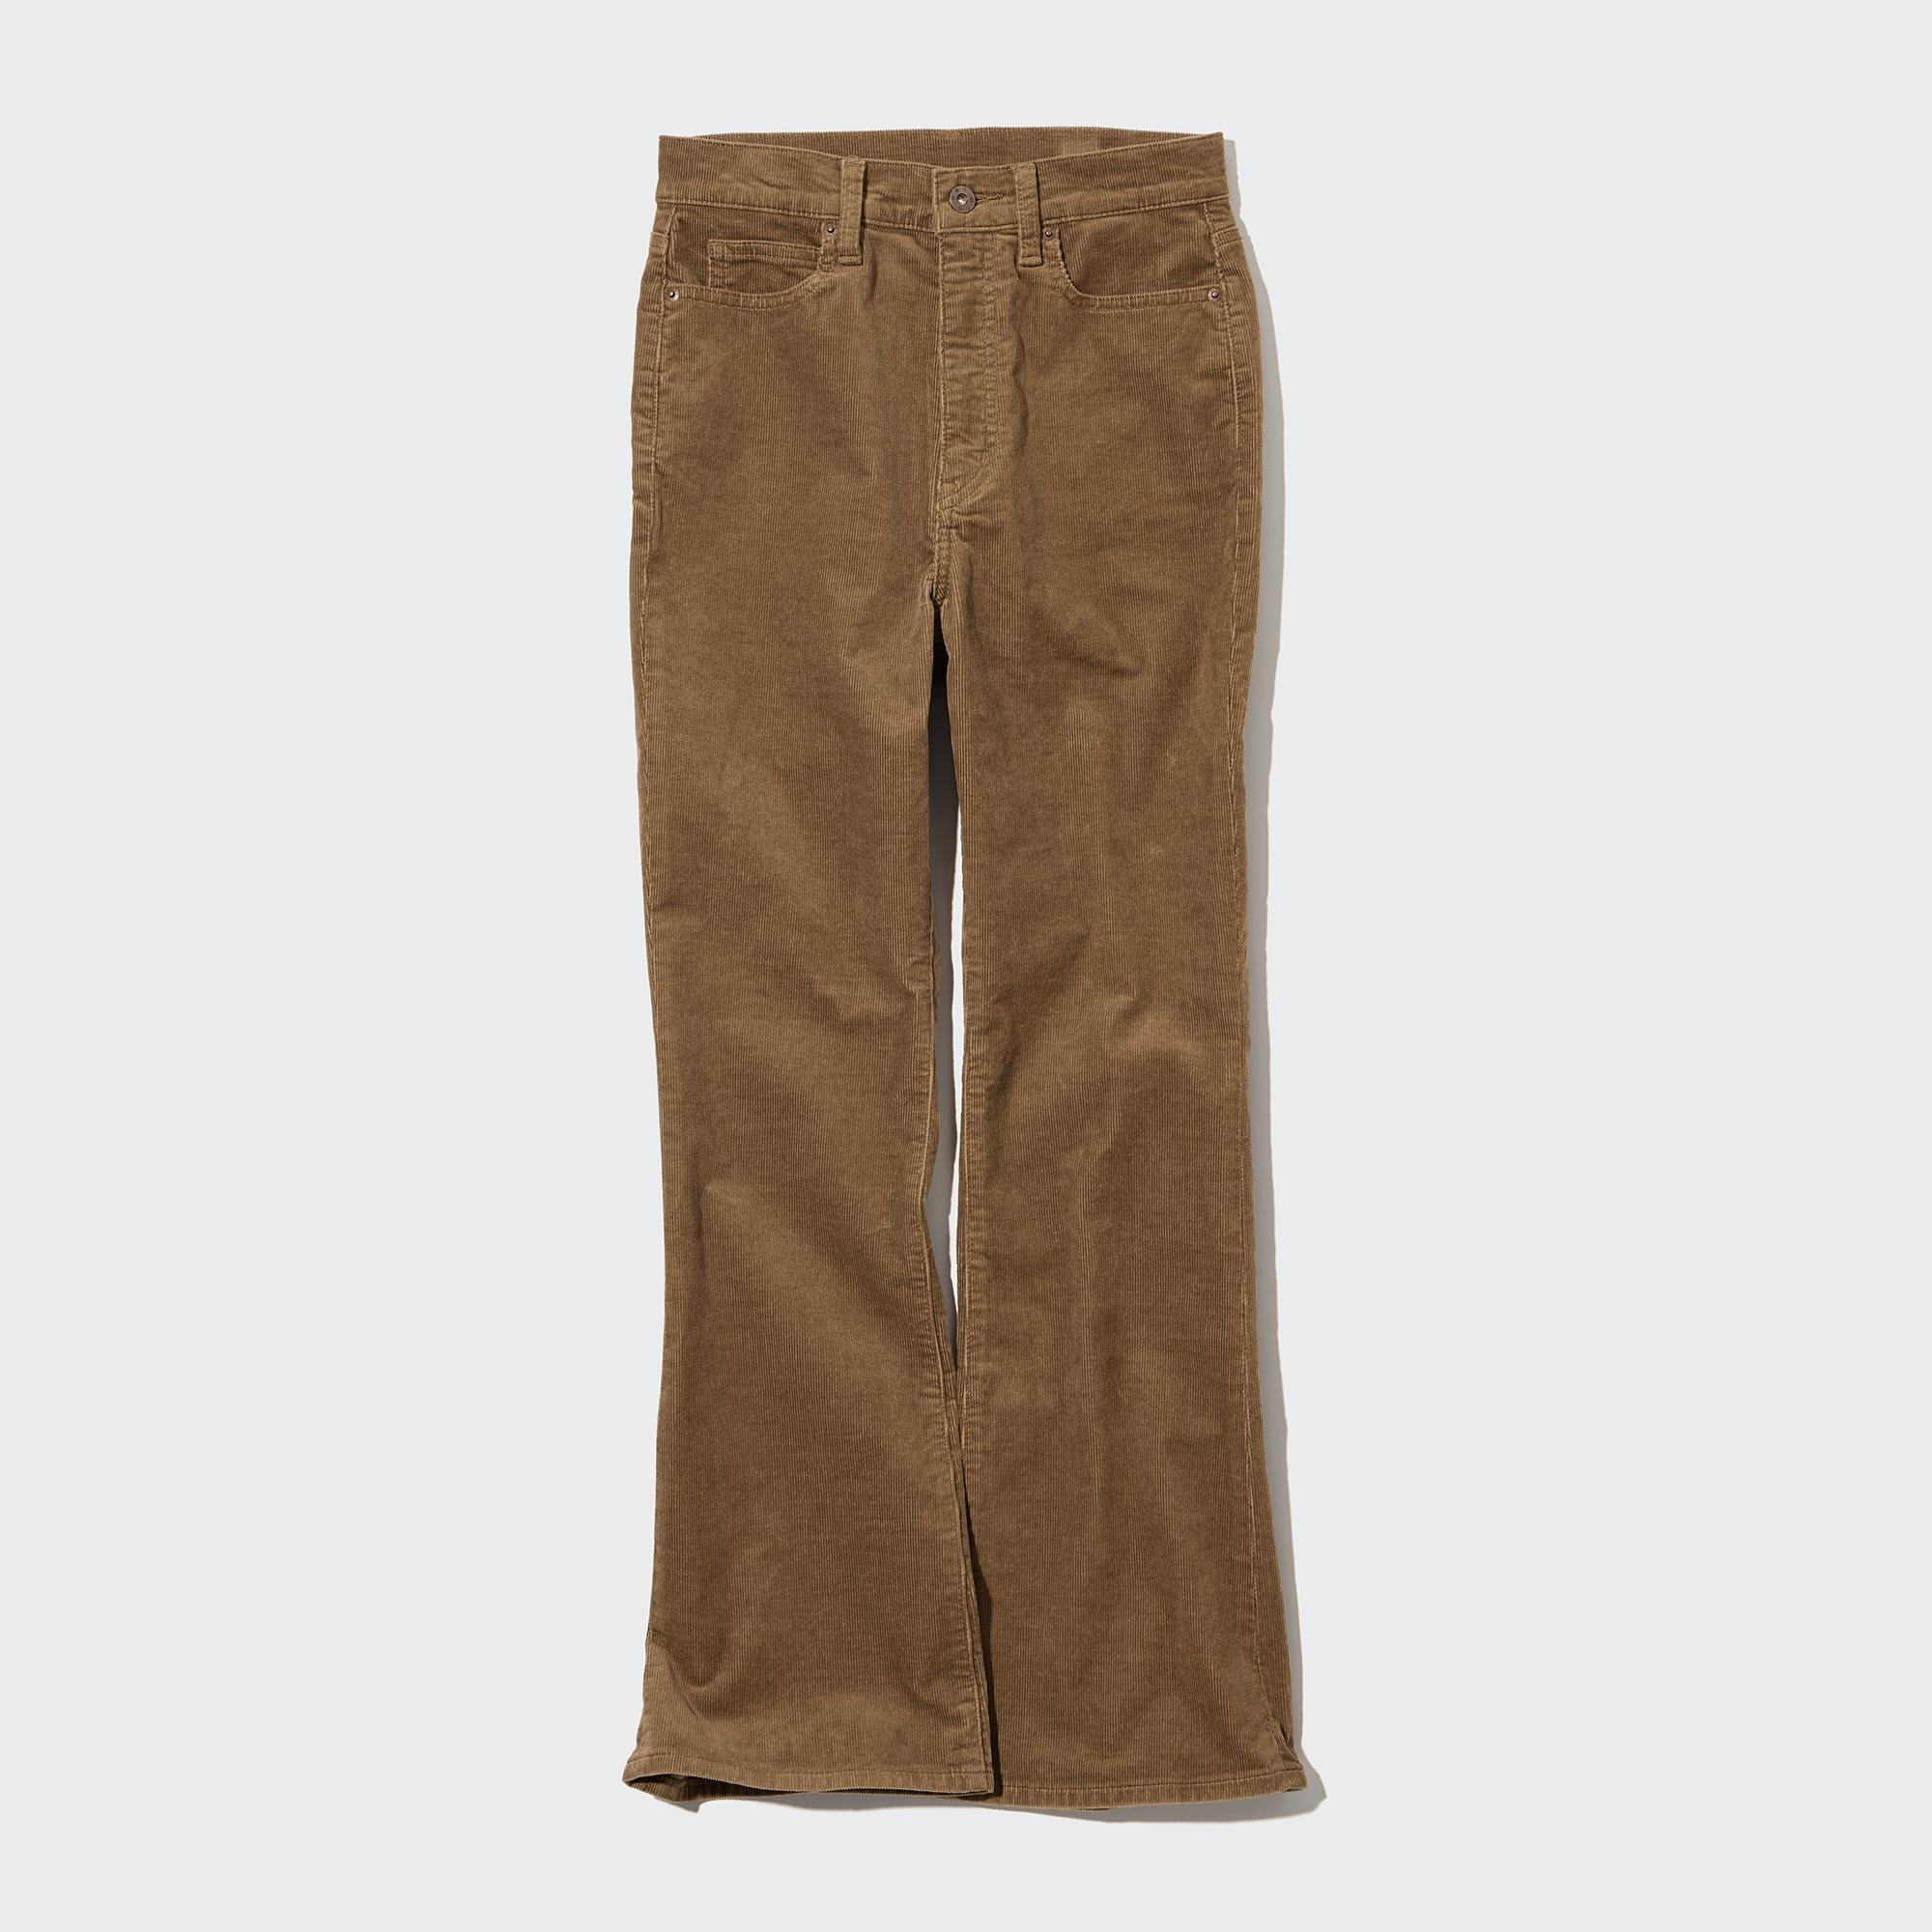 Uniqlo - Cotton Corduroy Slim Flared Trousers - Brown - 26inch